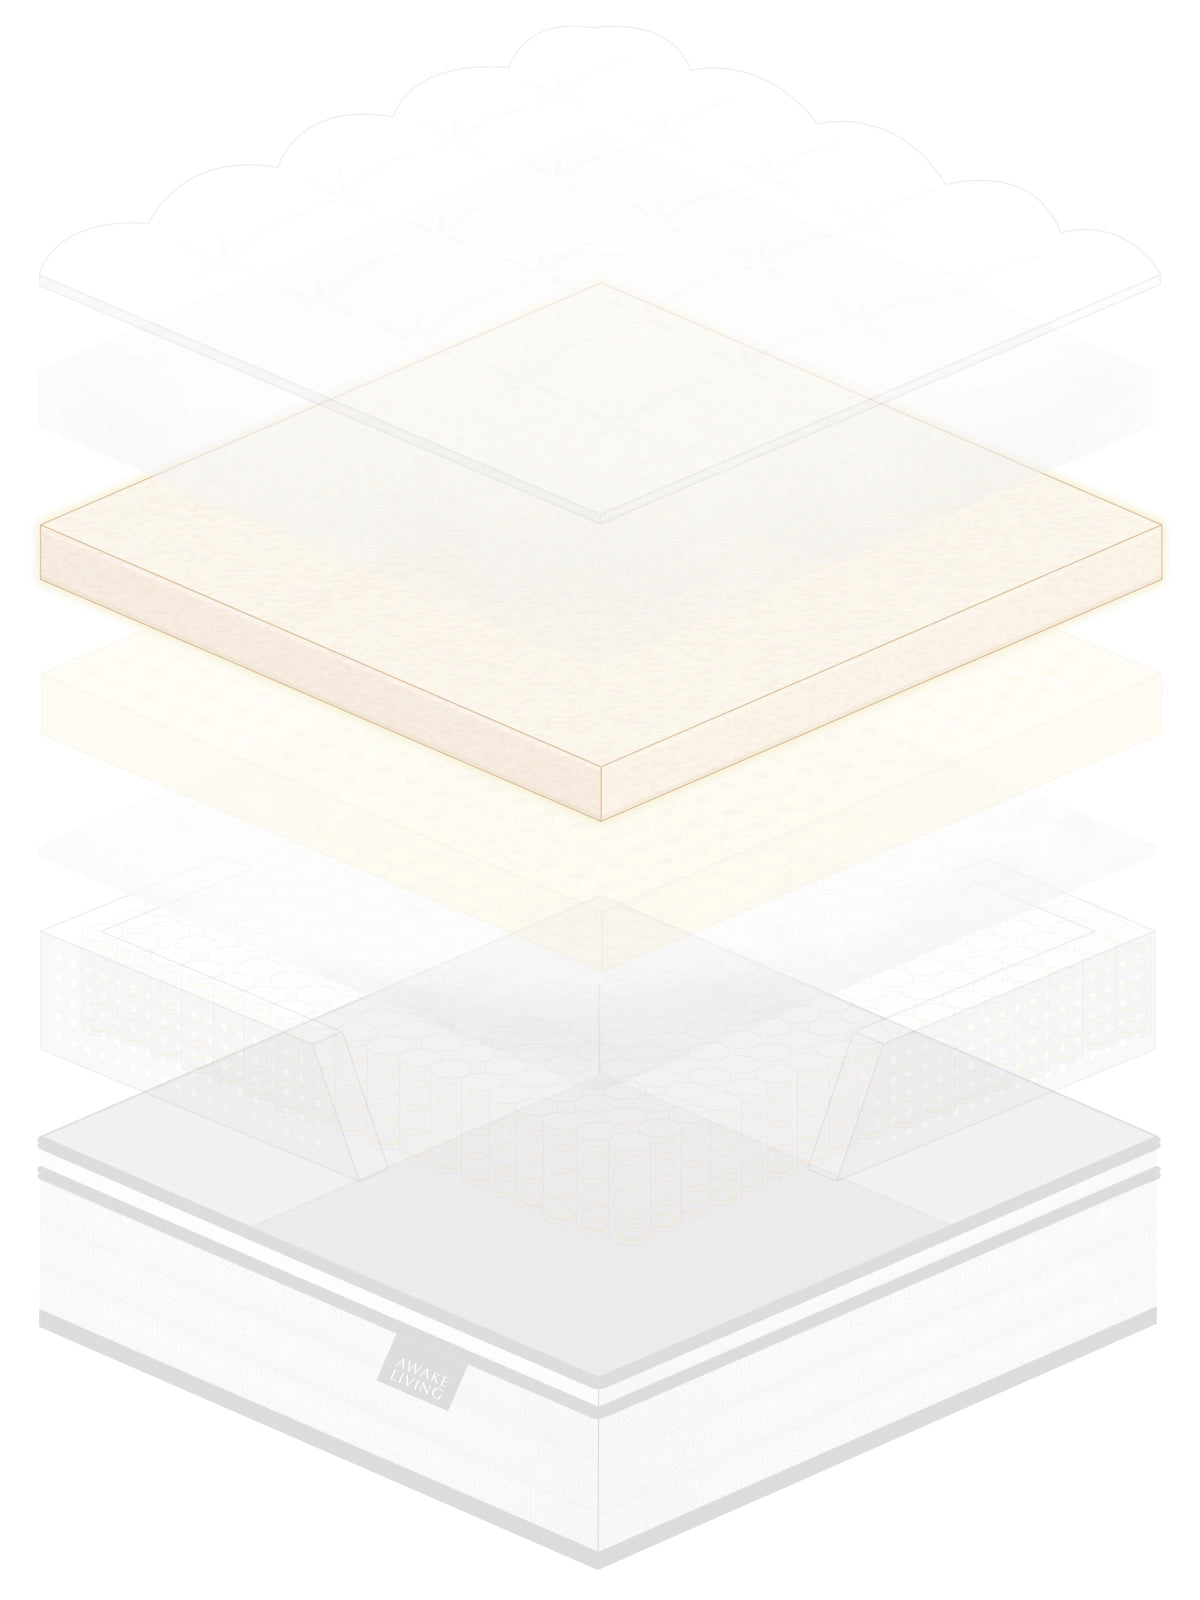 Luxury 3.0 美夢成真頂級三線鋼天絲乳膠獨立筒床墊分層圖 - HR 高密度彈力釋壓棉